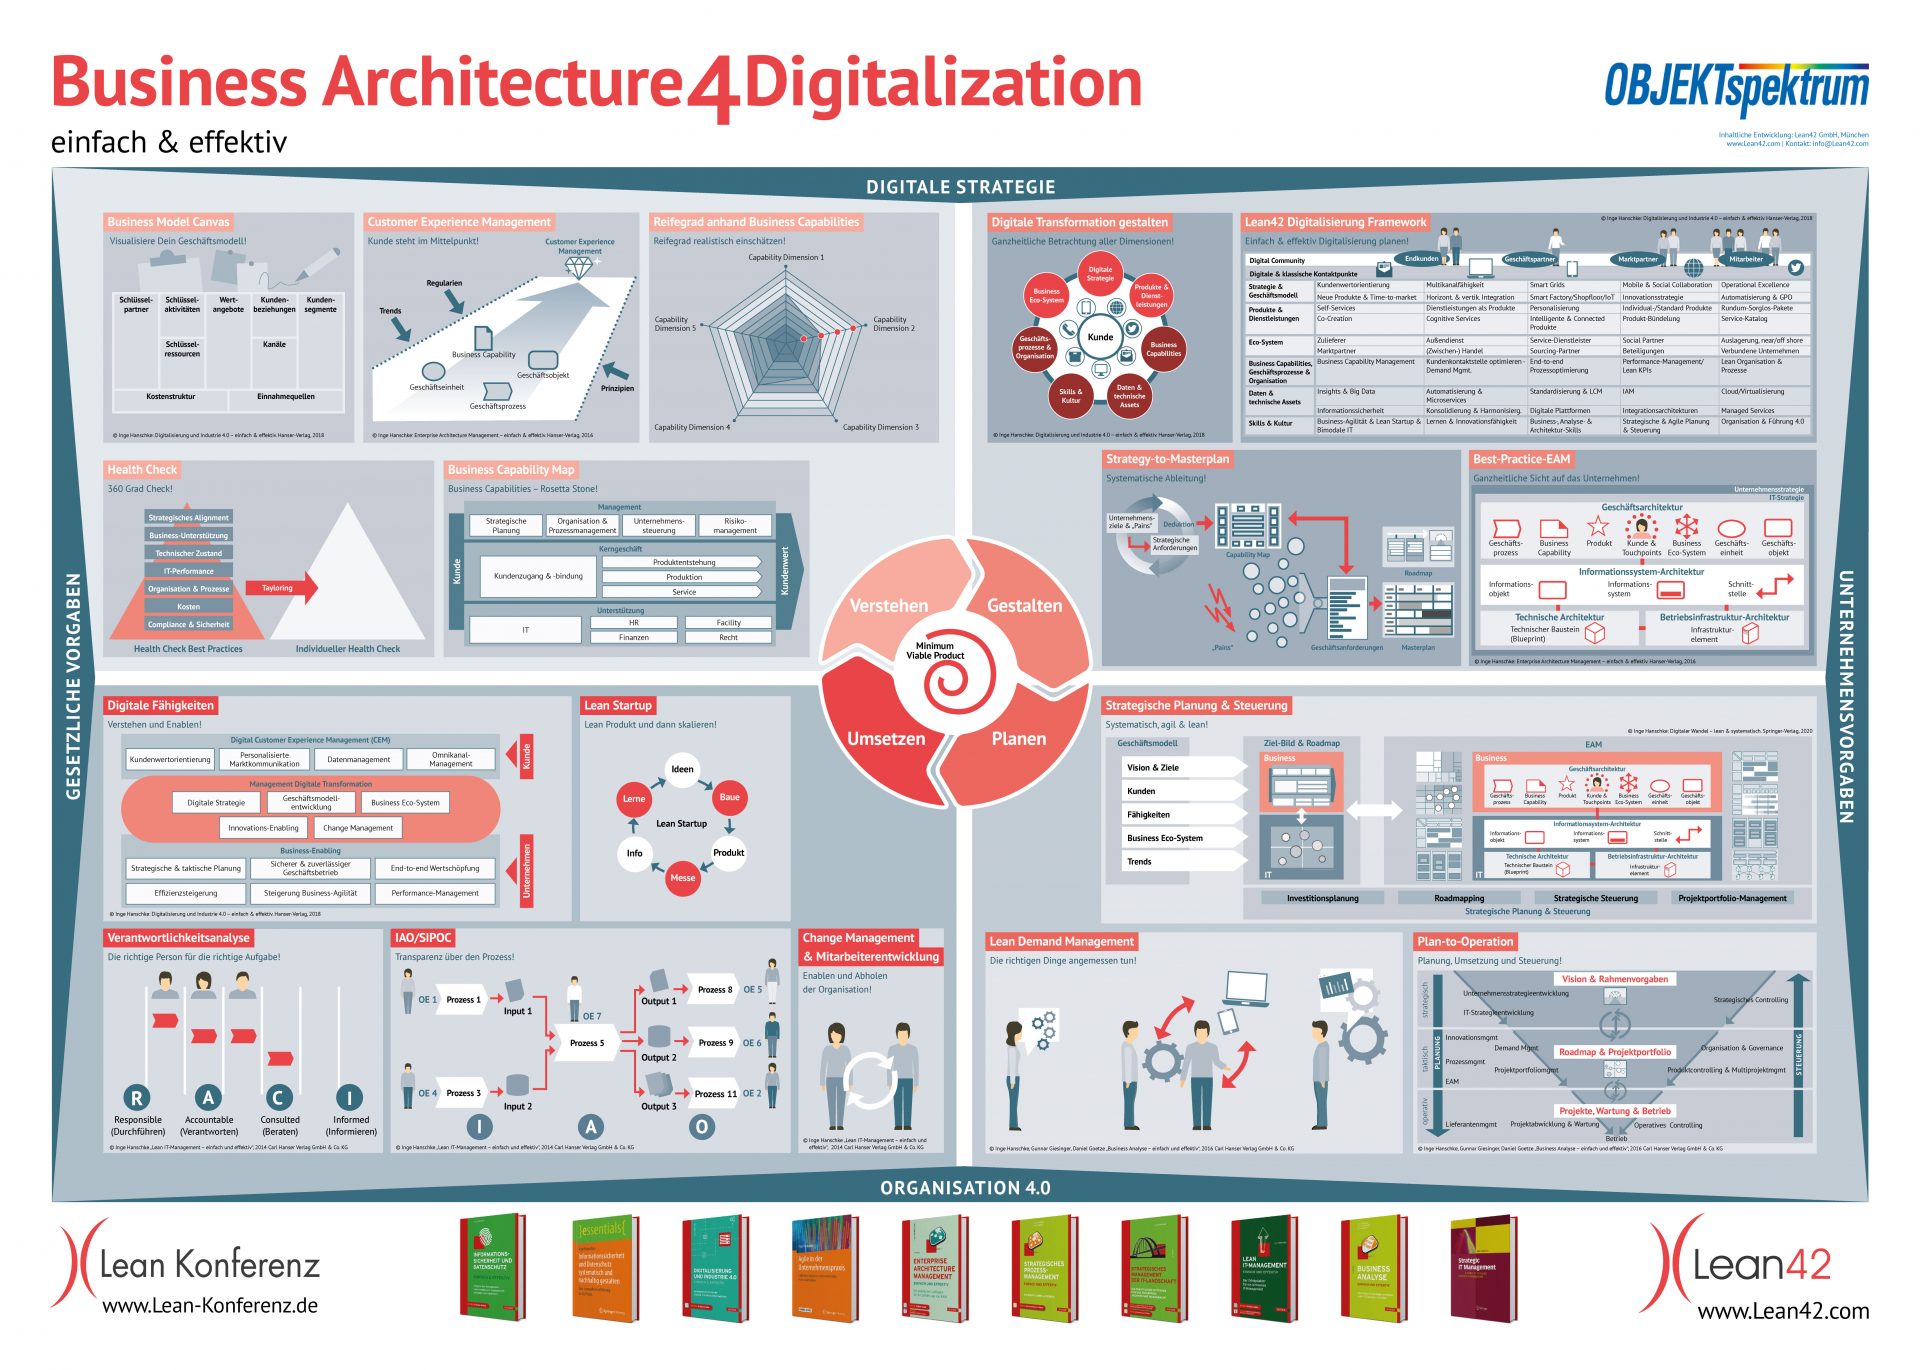 Lean42 Fachposter "Business Architecture 4 Digitalization"